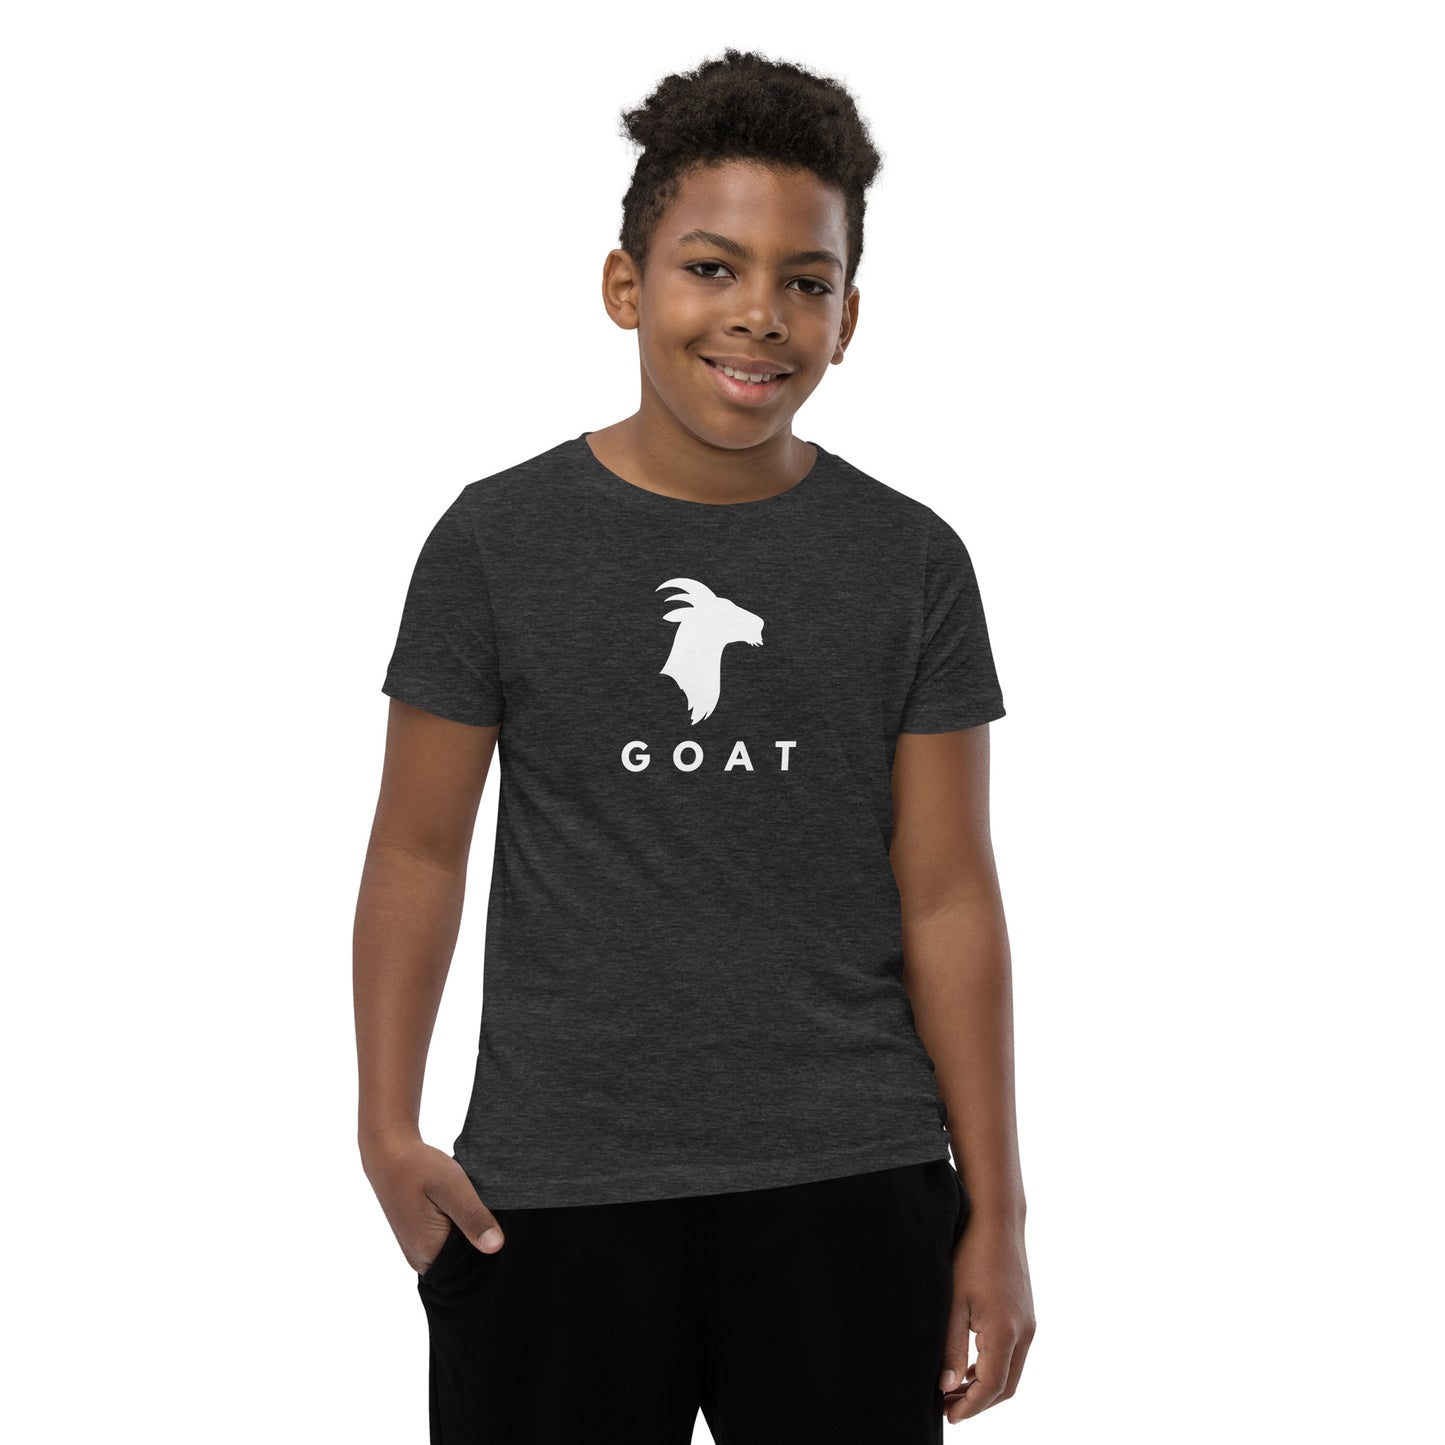 Youth Short Sleeve T-Shirt (GOAT)